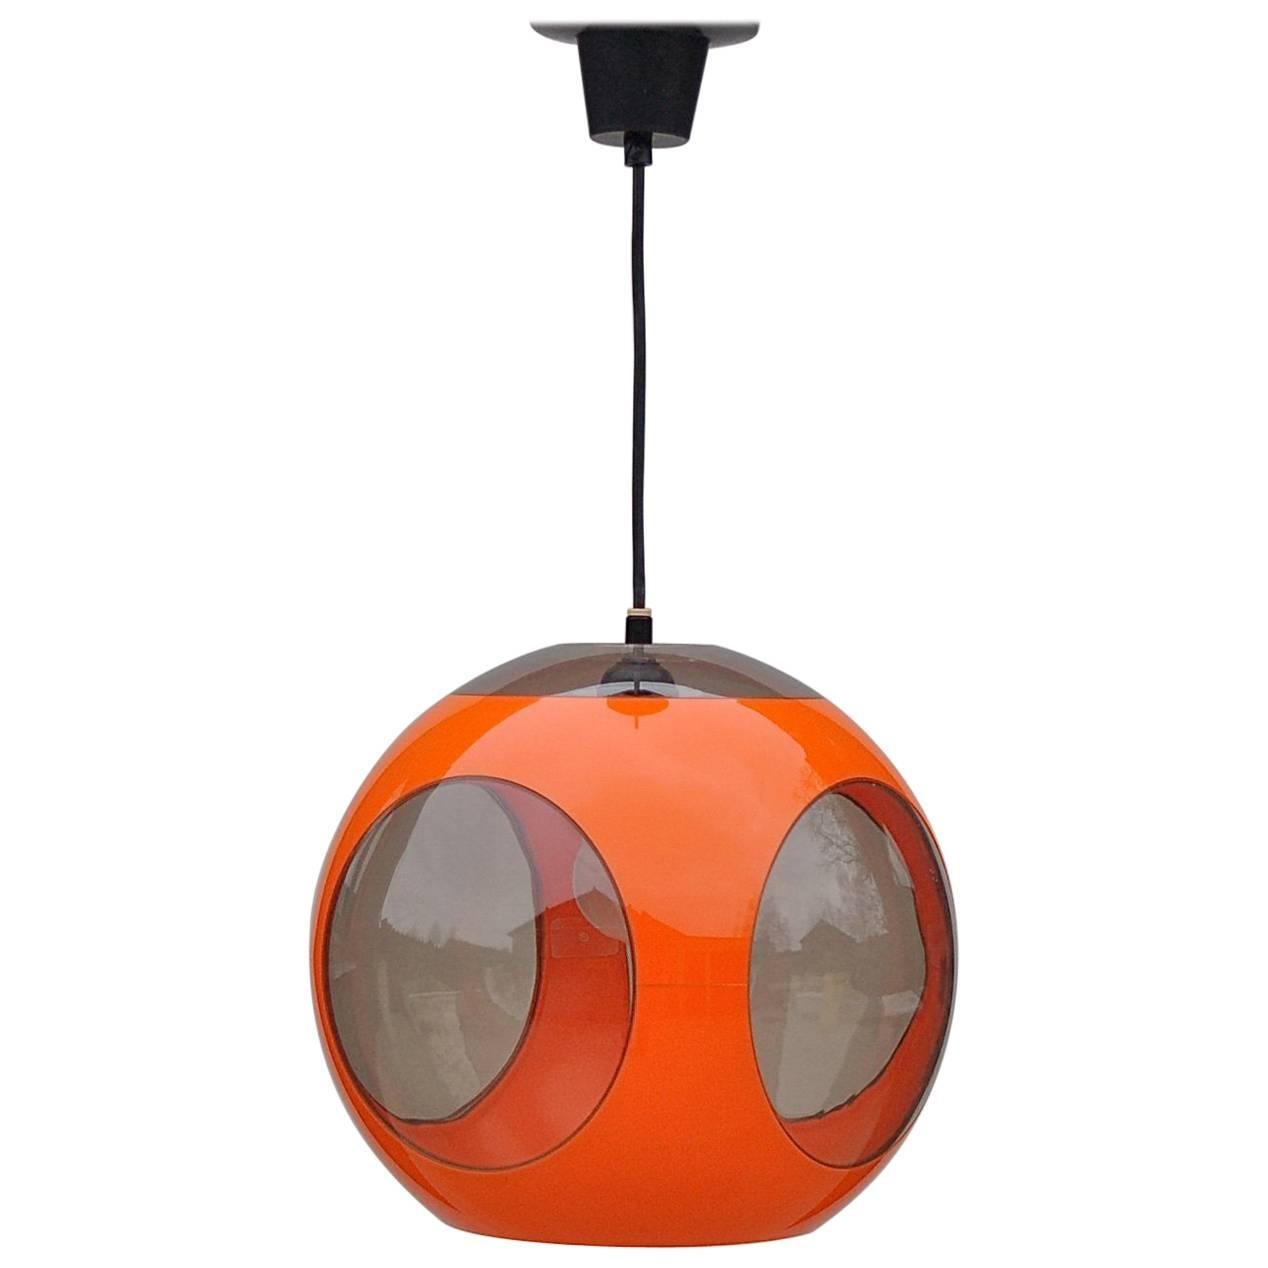 Orange Space Age UFO Lamp by Luigi Colani, 1970s